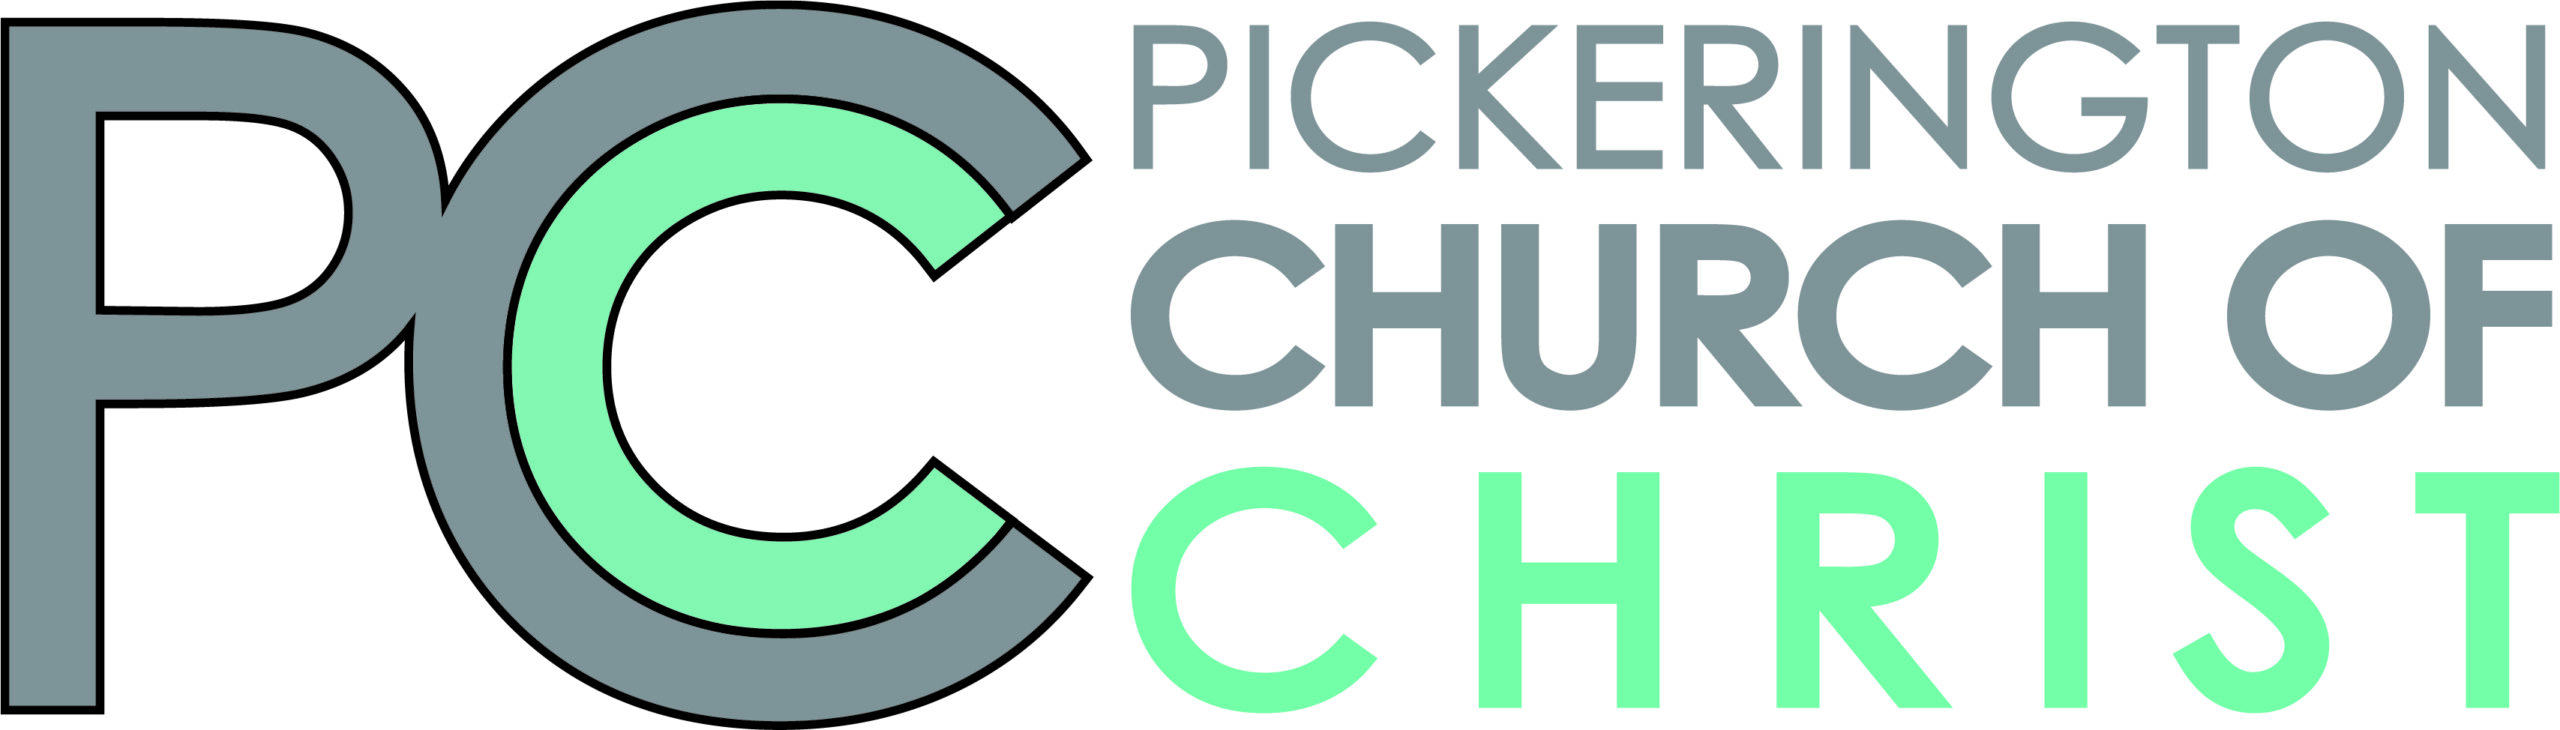 Pickerington Church of Christ